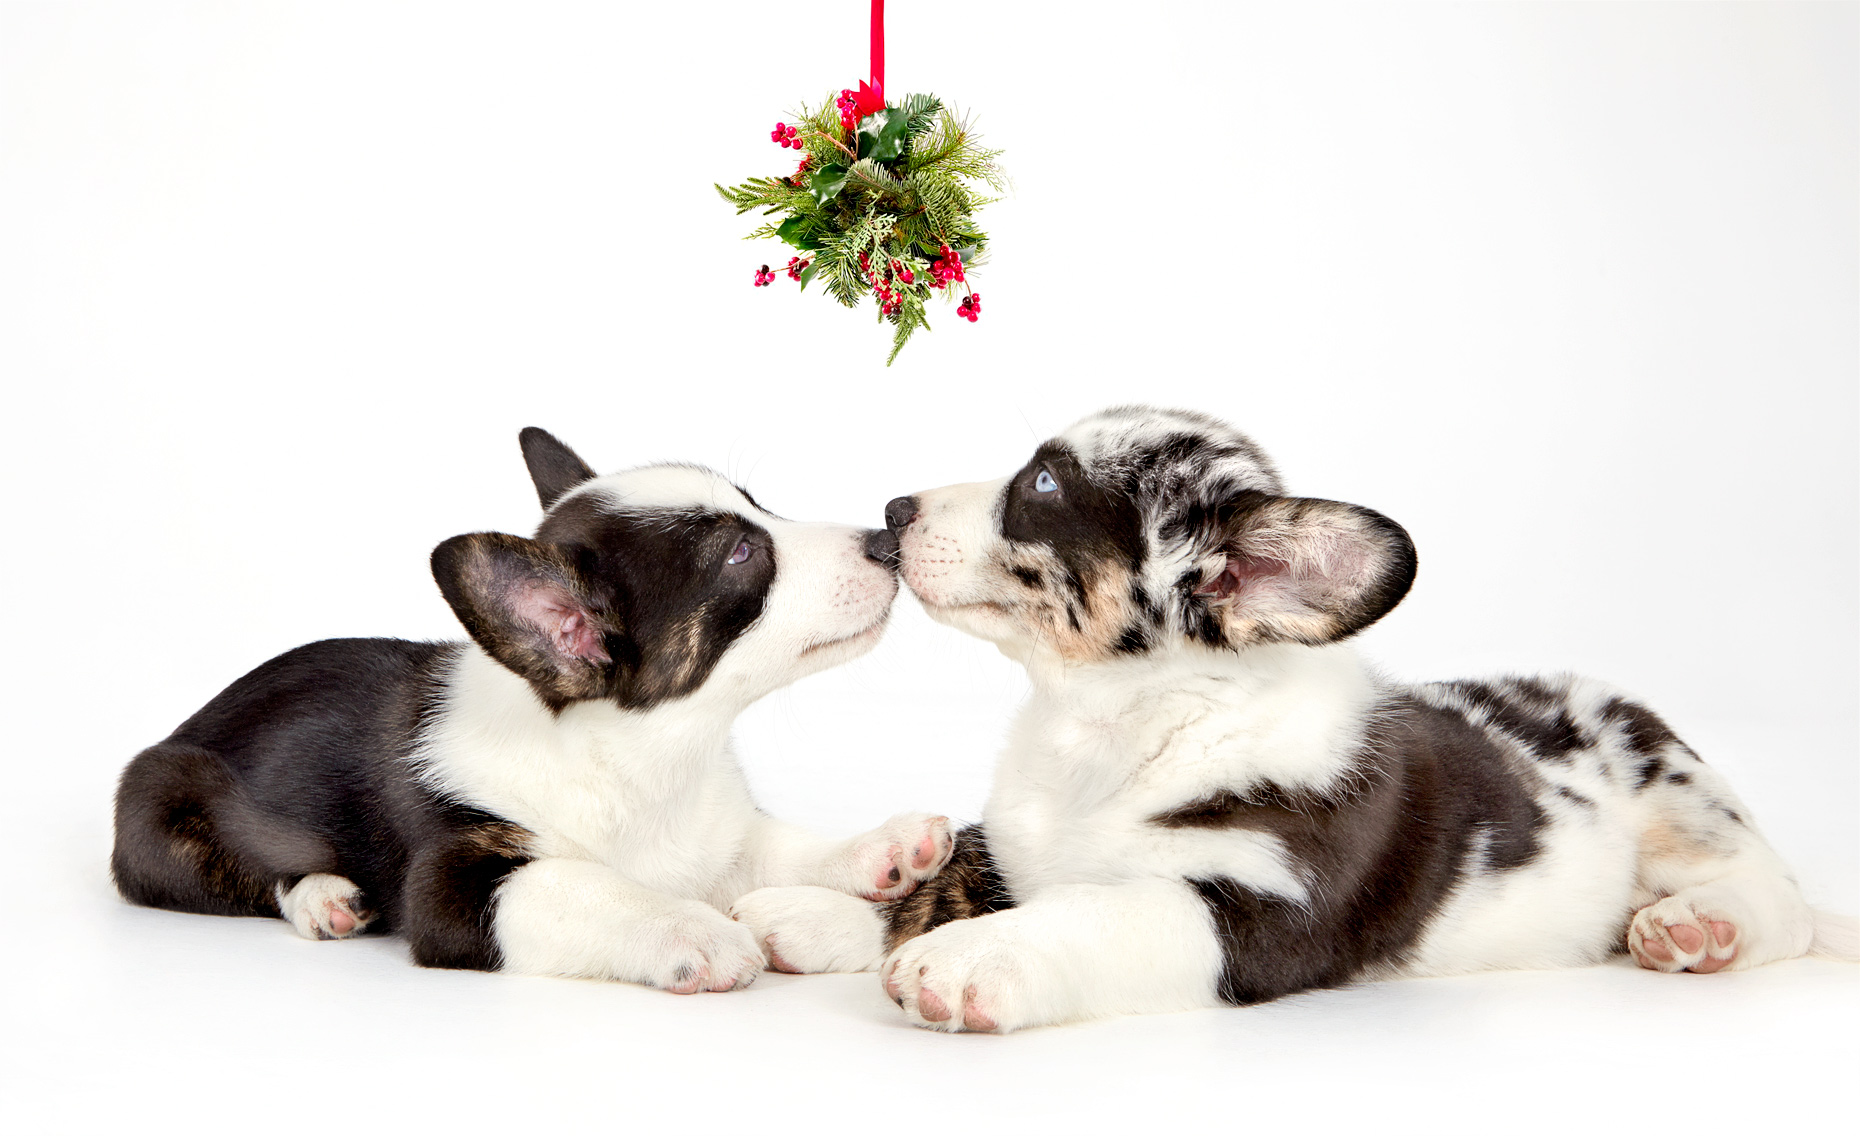 Corgi puppies kissing under mistletoe